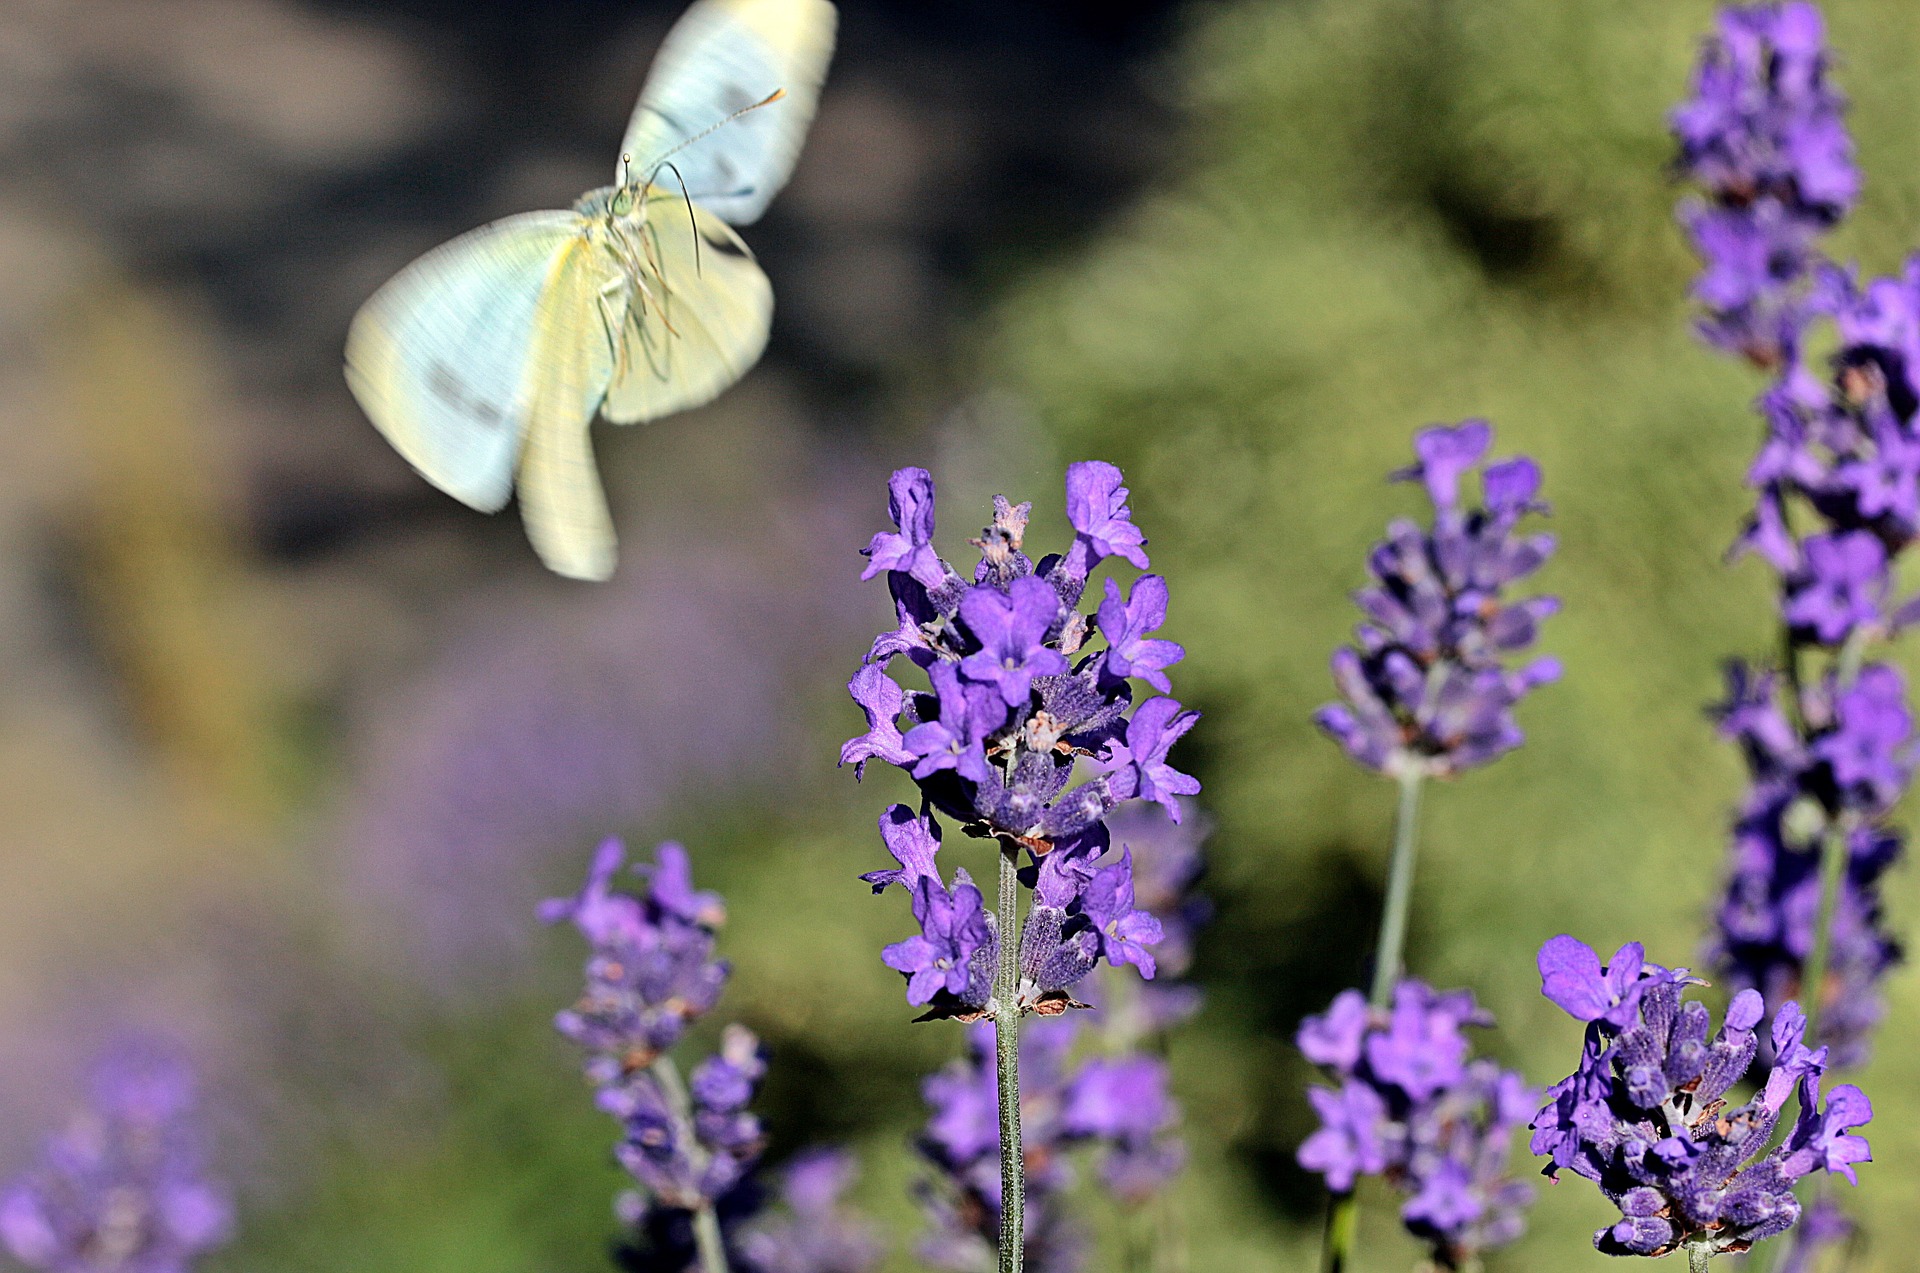 Butterfly in the garden photo